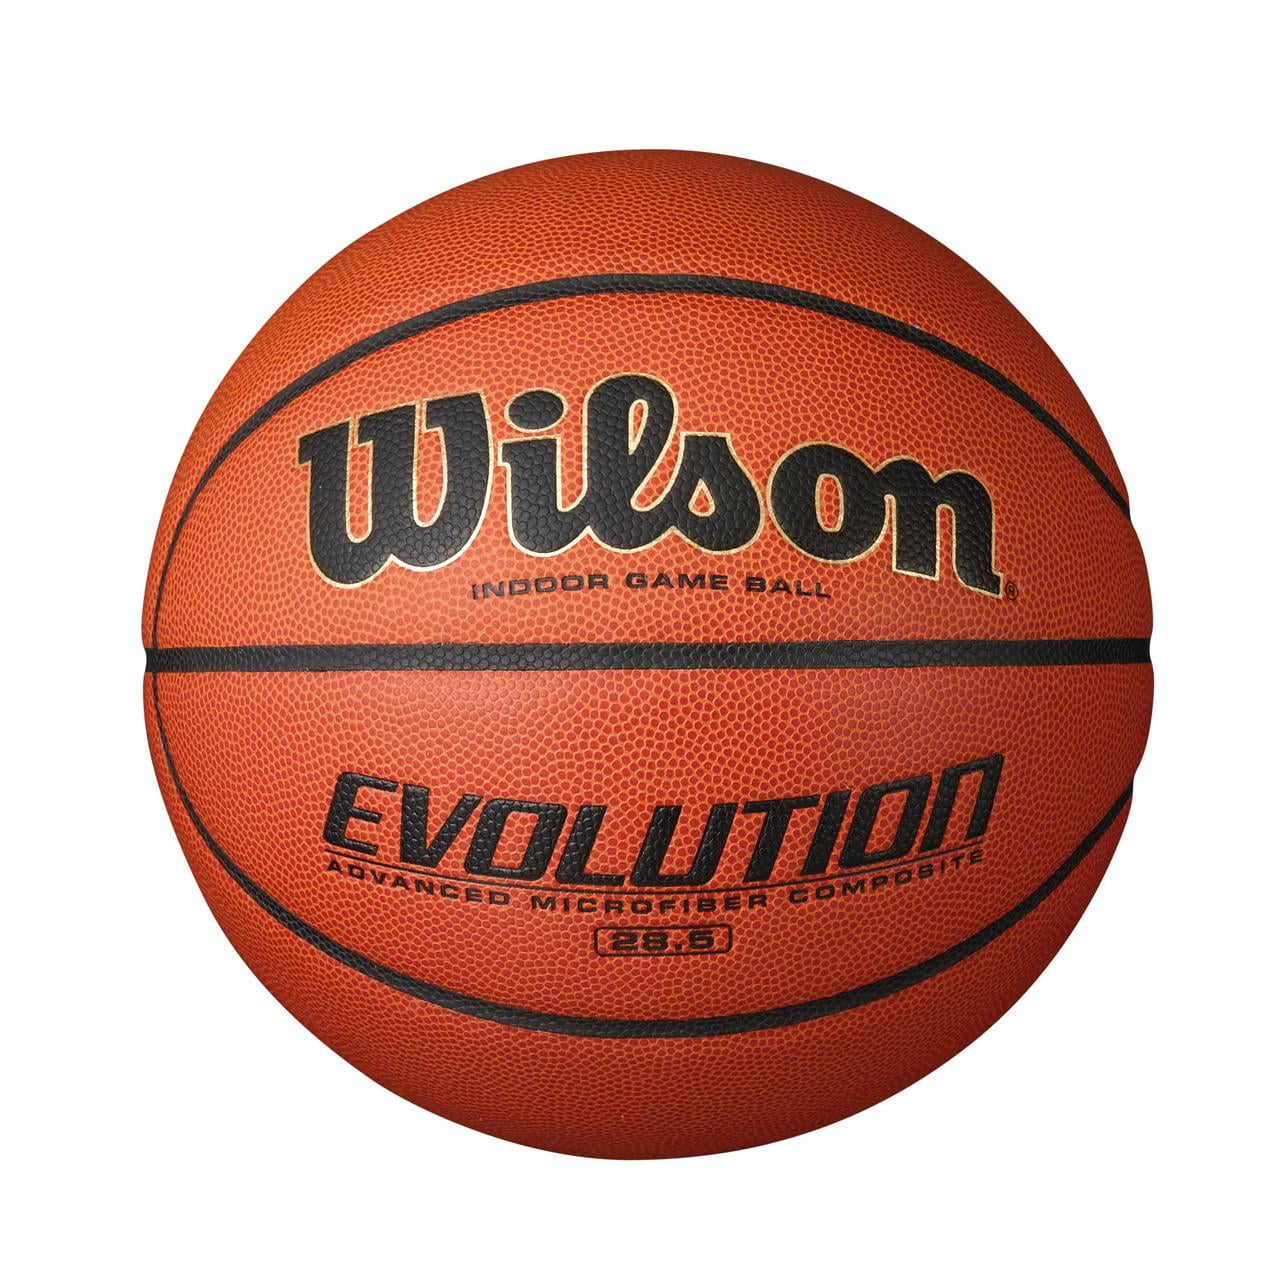 Wilson Evolution Official Game Basketball 29.5" 